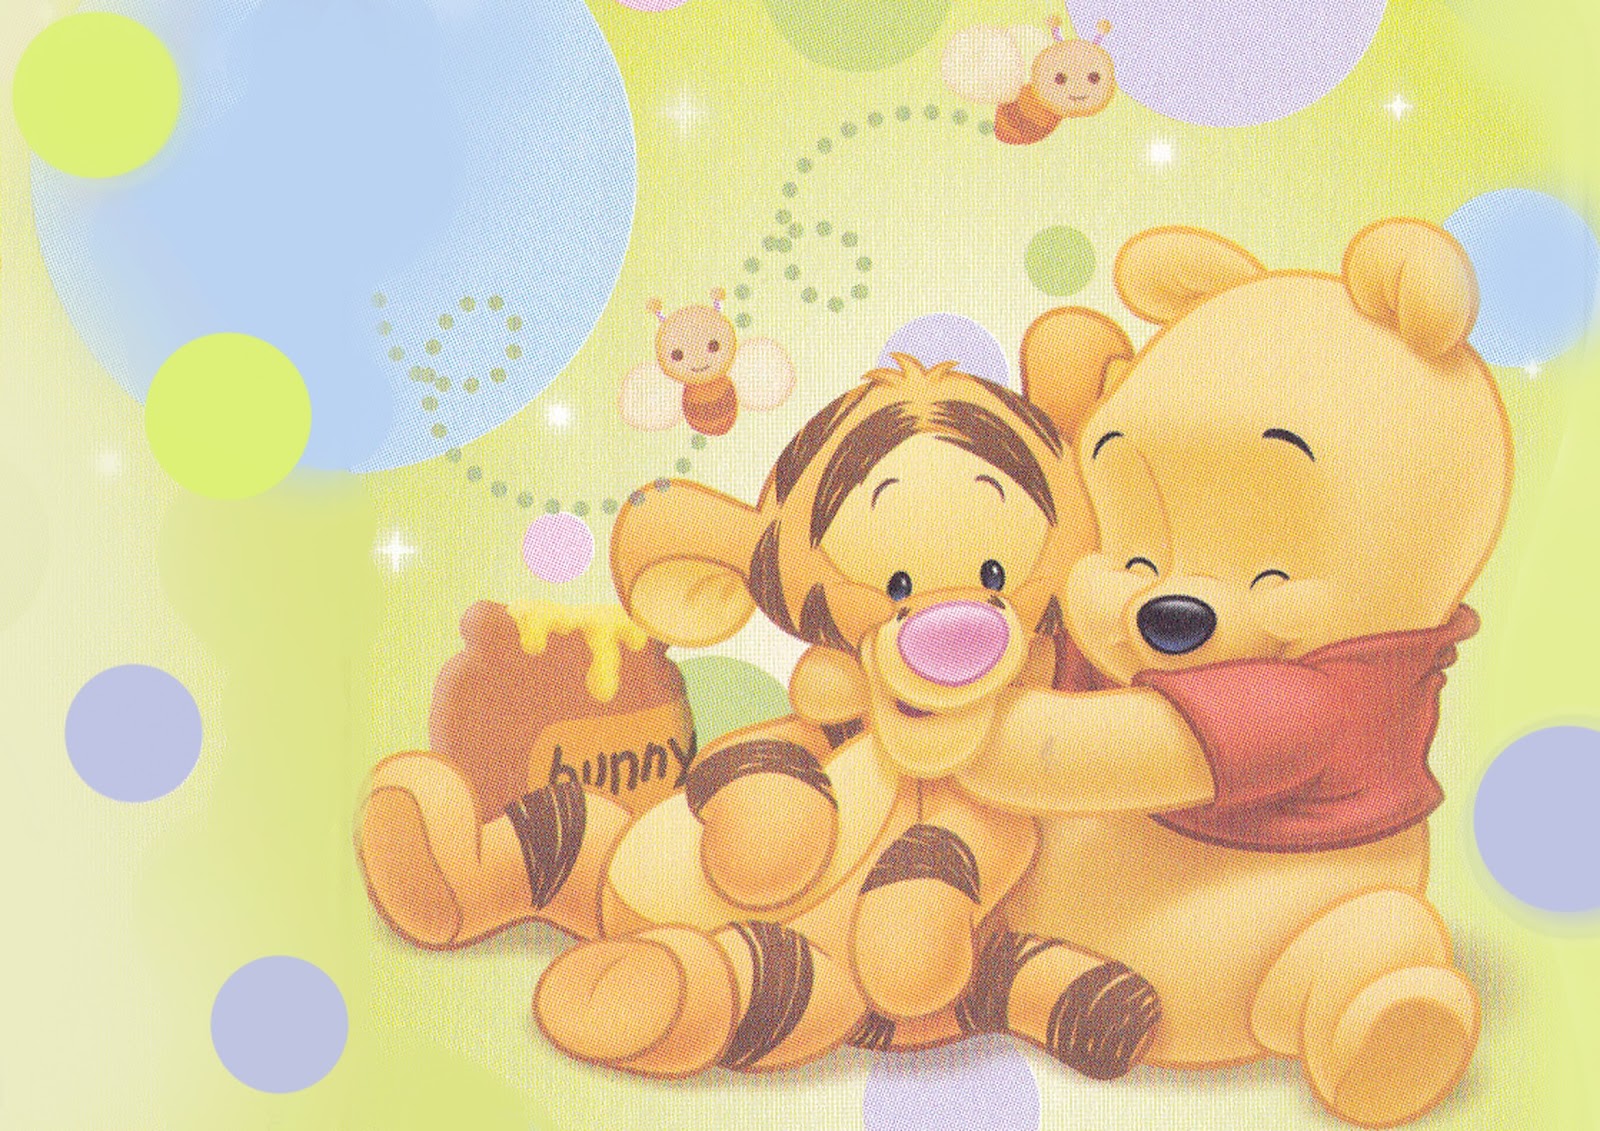 http://3.bp.blogspot.com/-Fgnswk4NyWk/T9FKbQcw48I/AAAAAAAAA2U/LS-rDwJazVw/s1600/Baby-pooh-wallpaper-baby-pooh-30438319-2339-1653.jpg